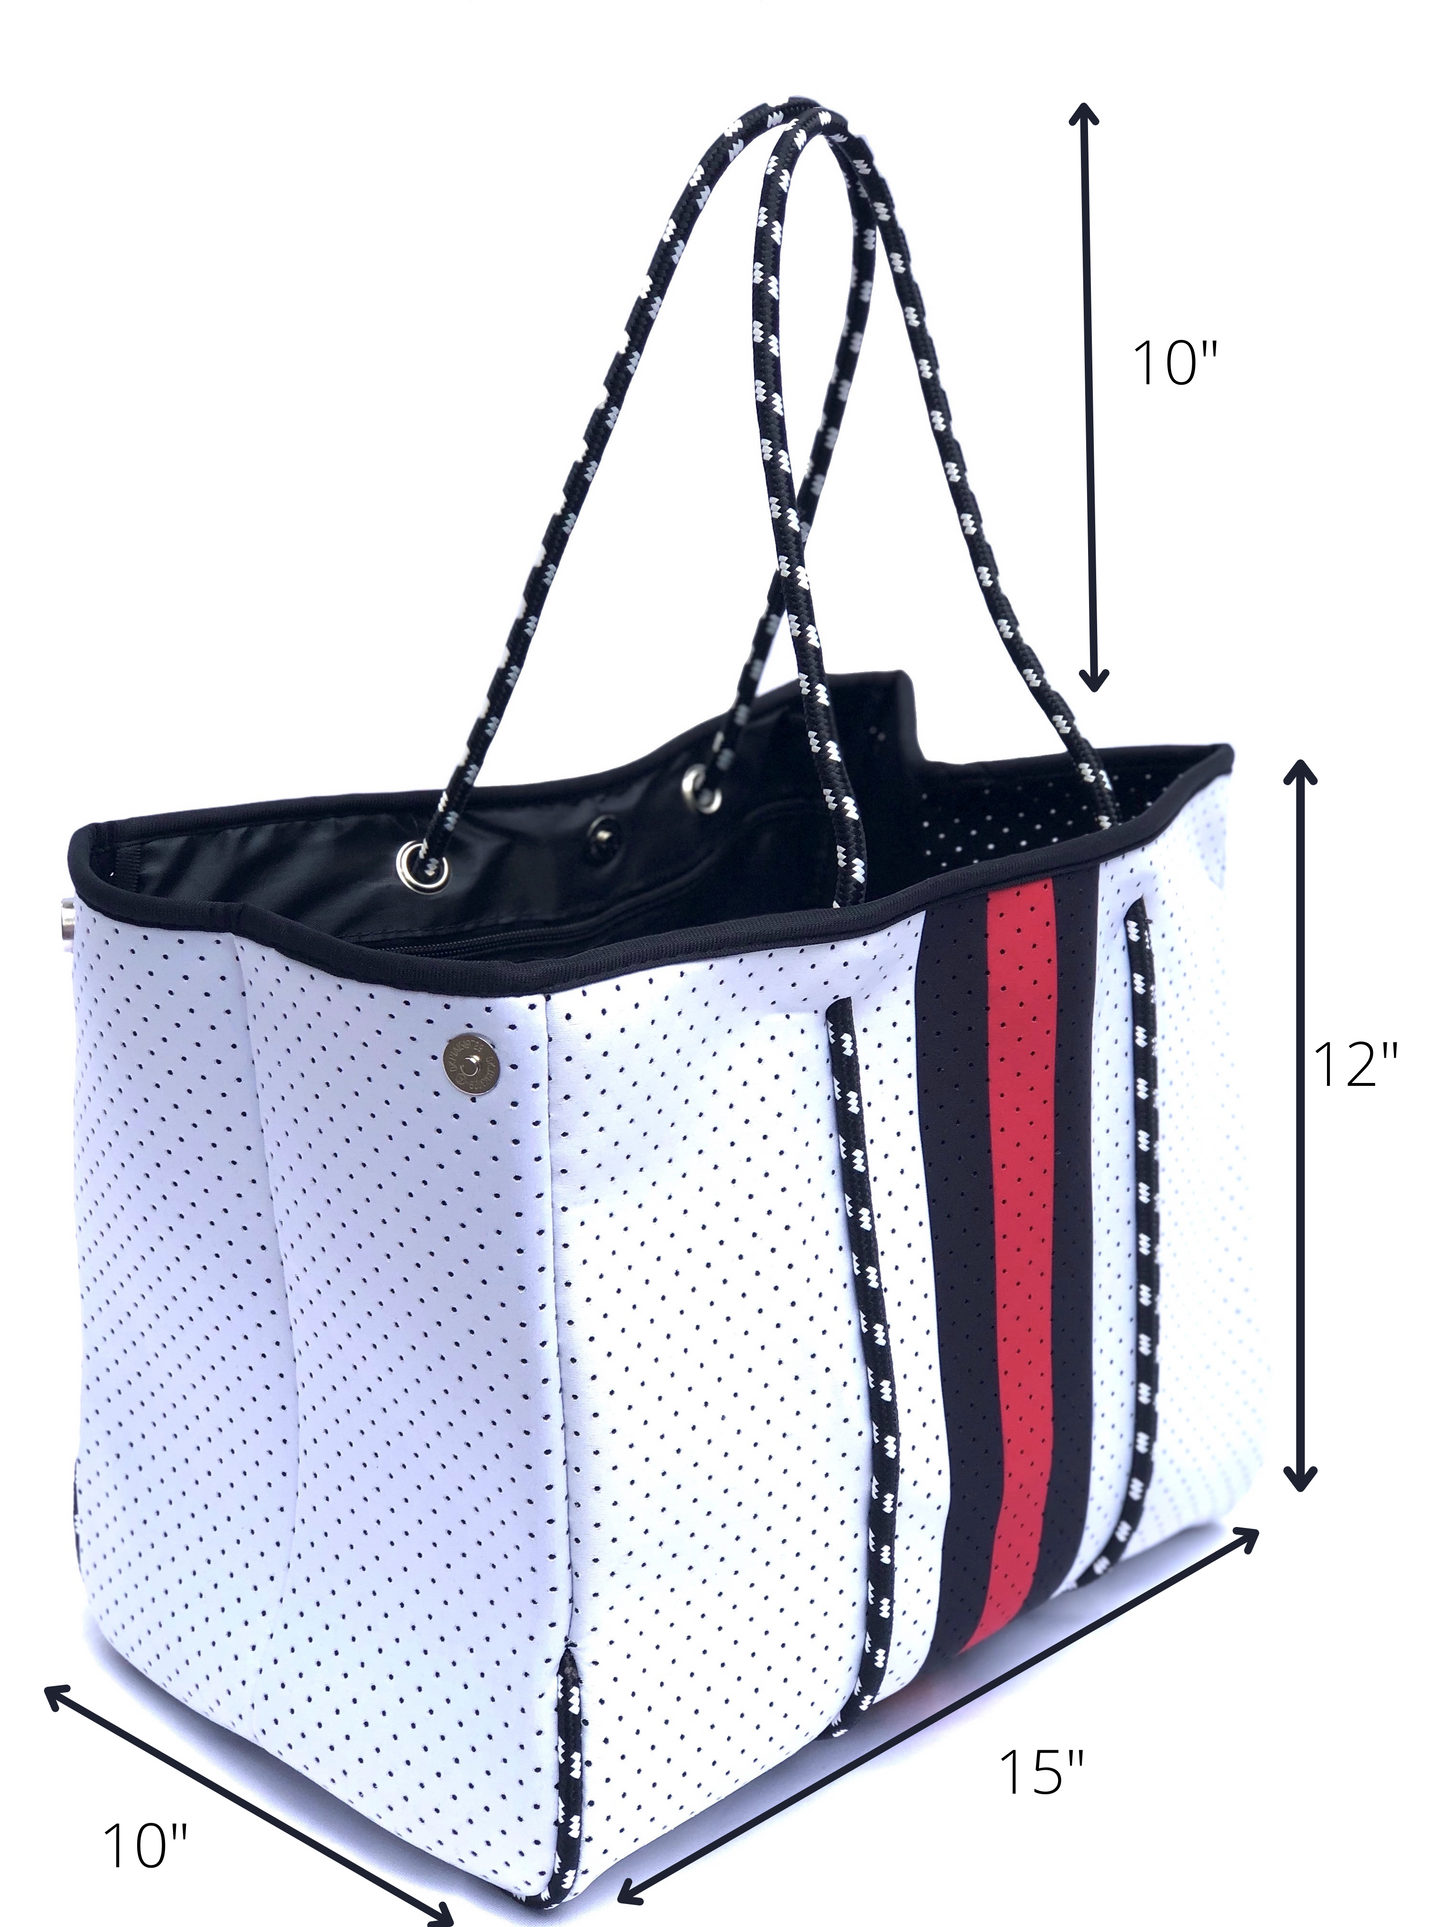 Neoprene Tote Bag by Dallas Hill Design White Bag Red & Black Stripes